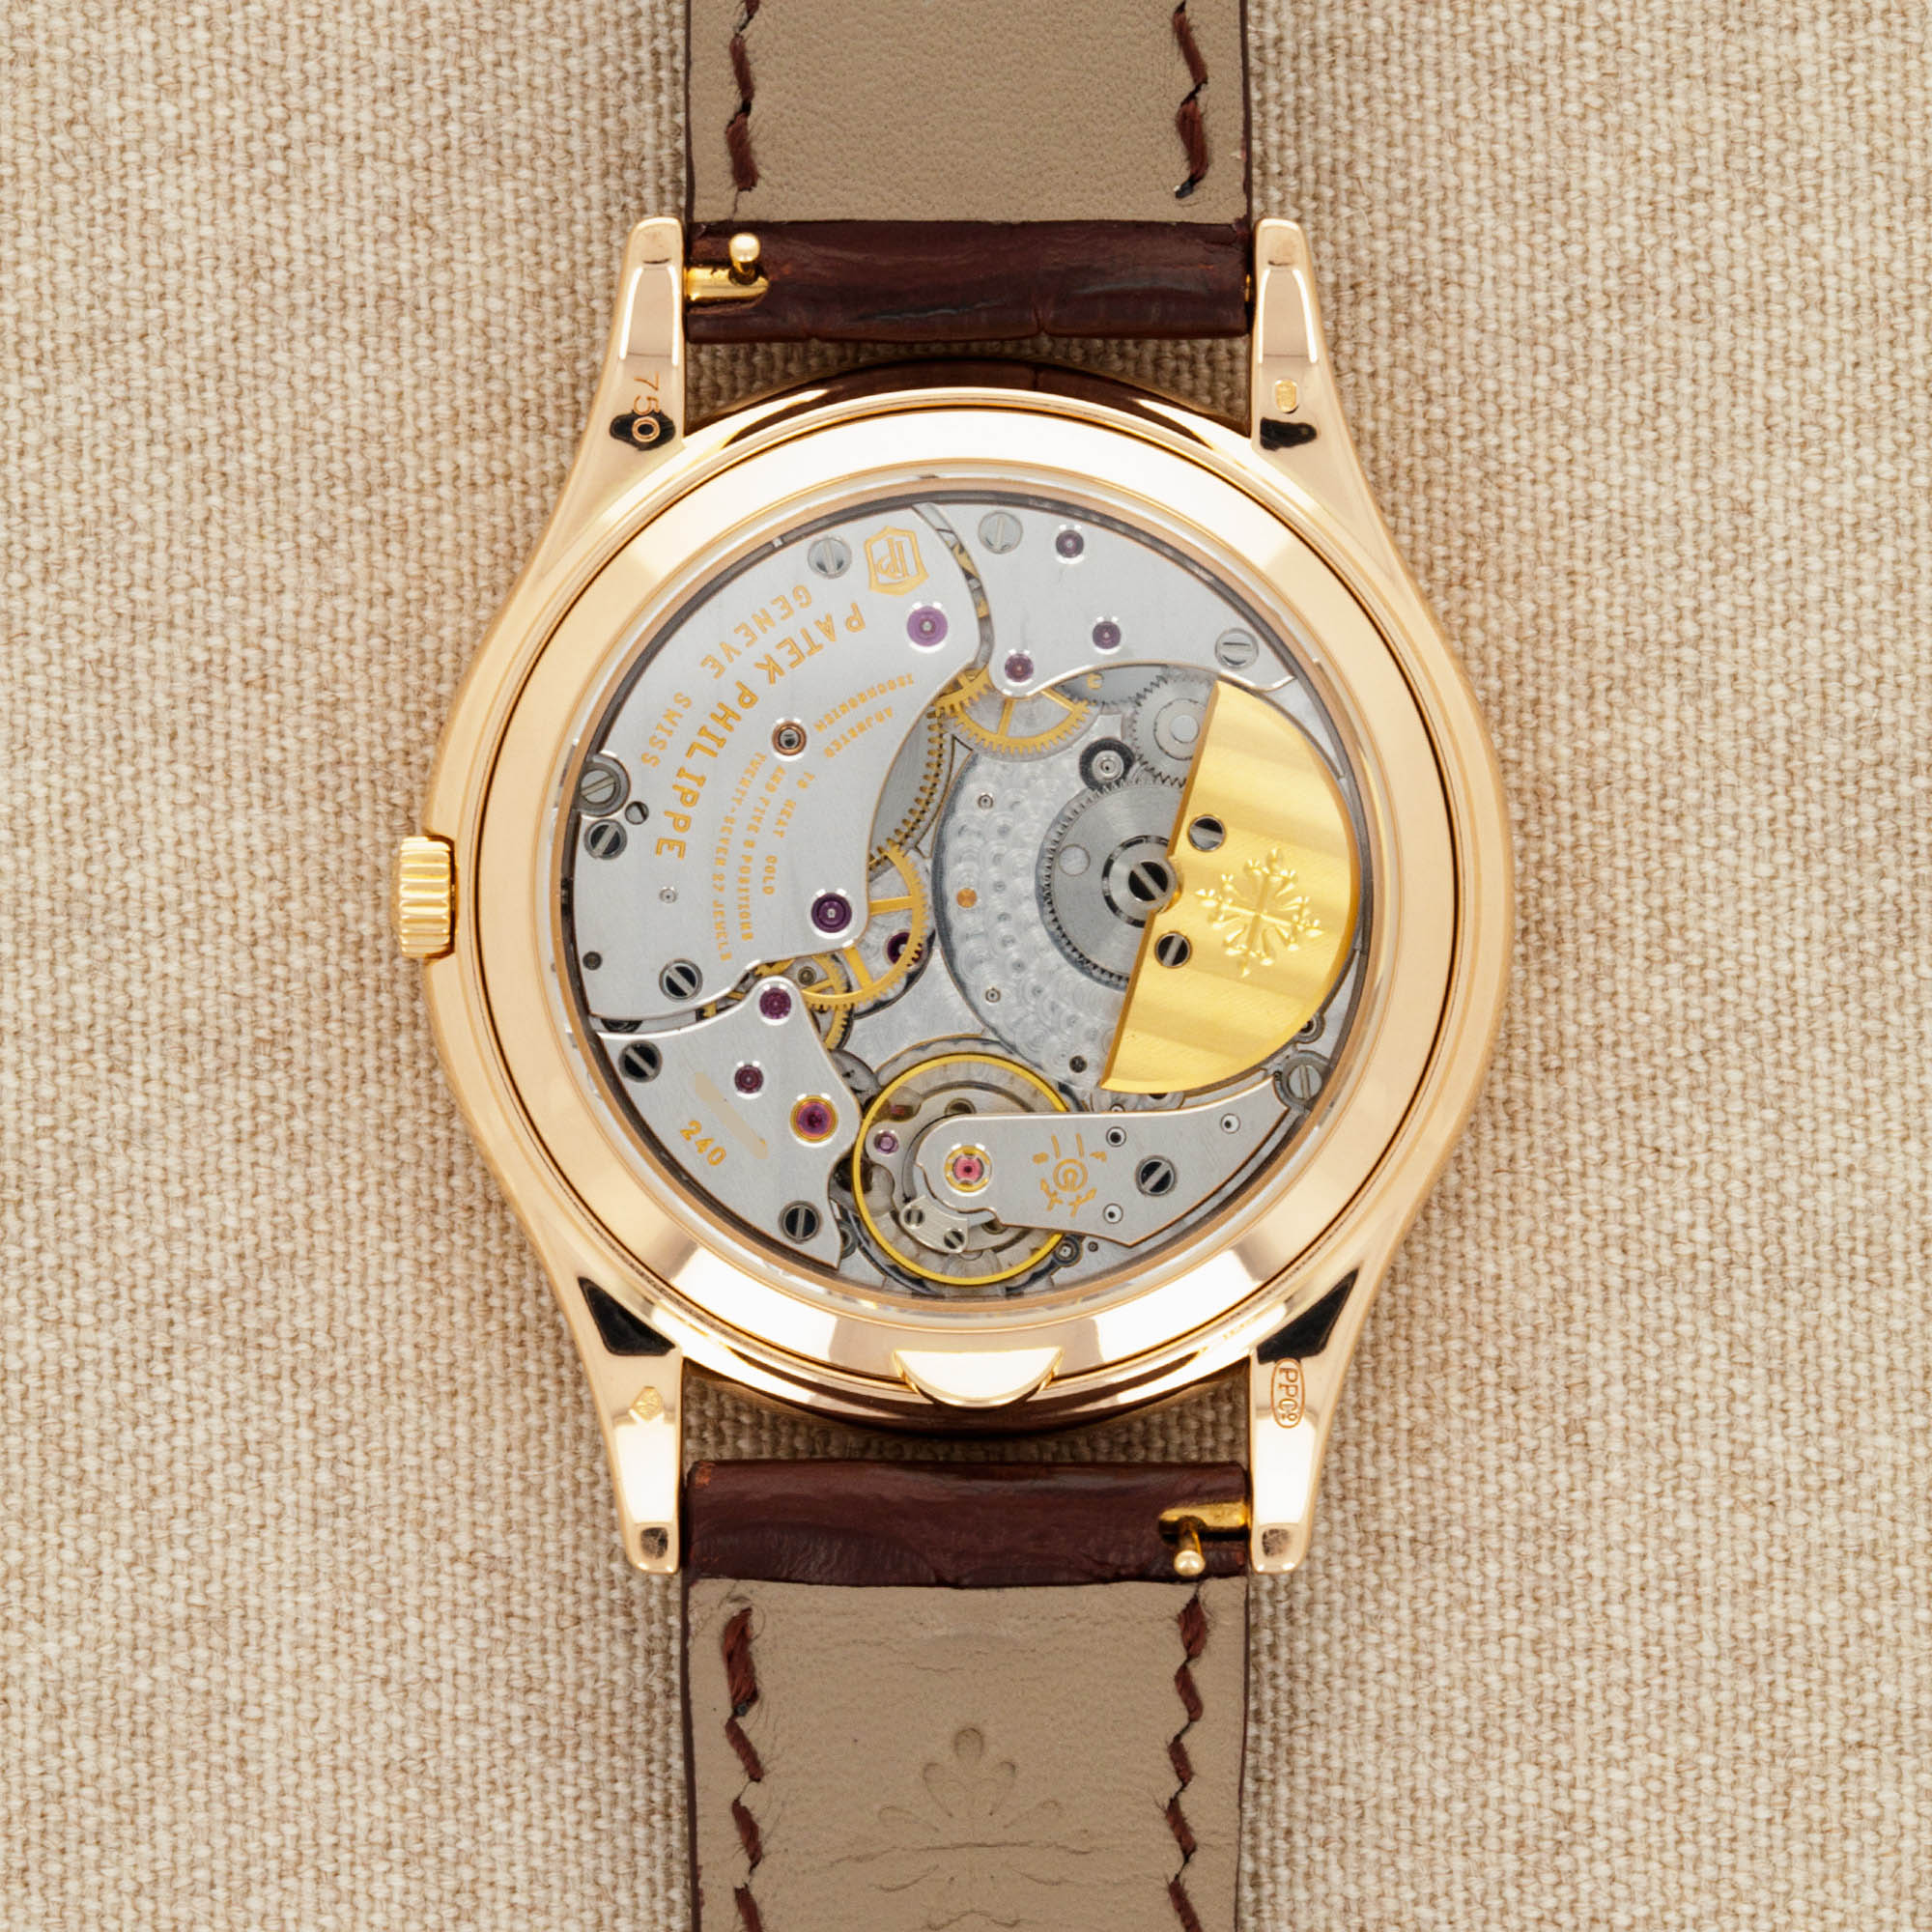 Patek Philippe Rose Gold Perpetual Calendar Watch Ref. 5140